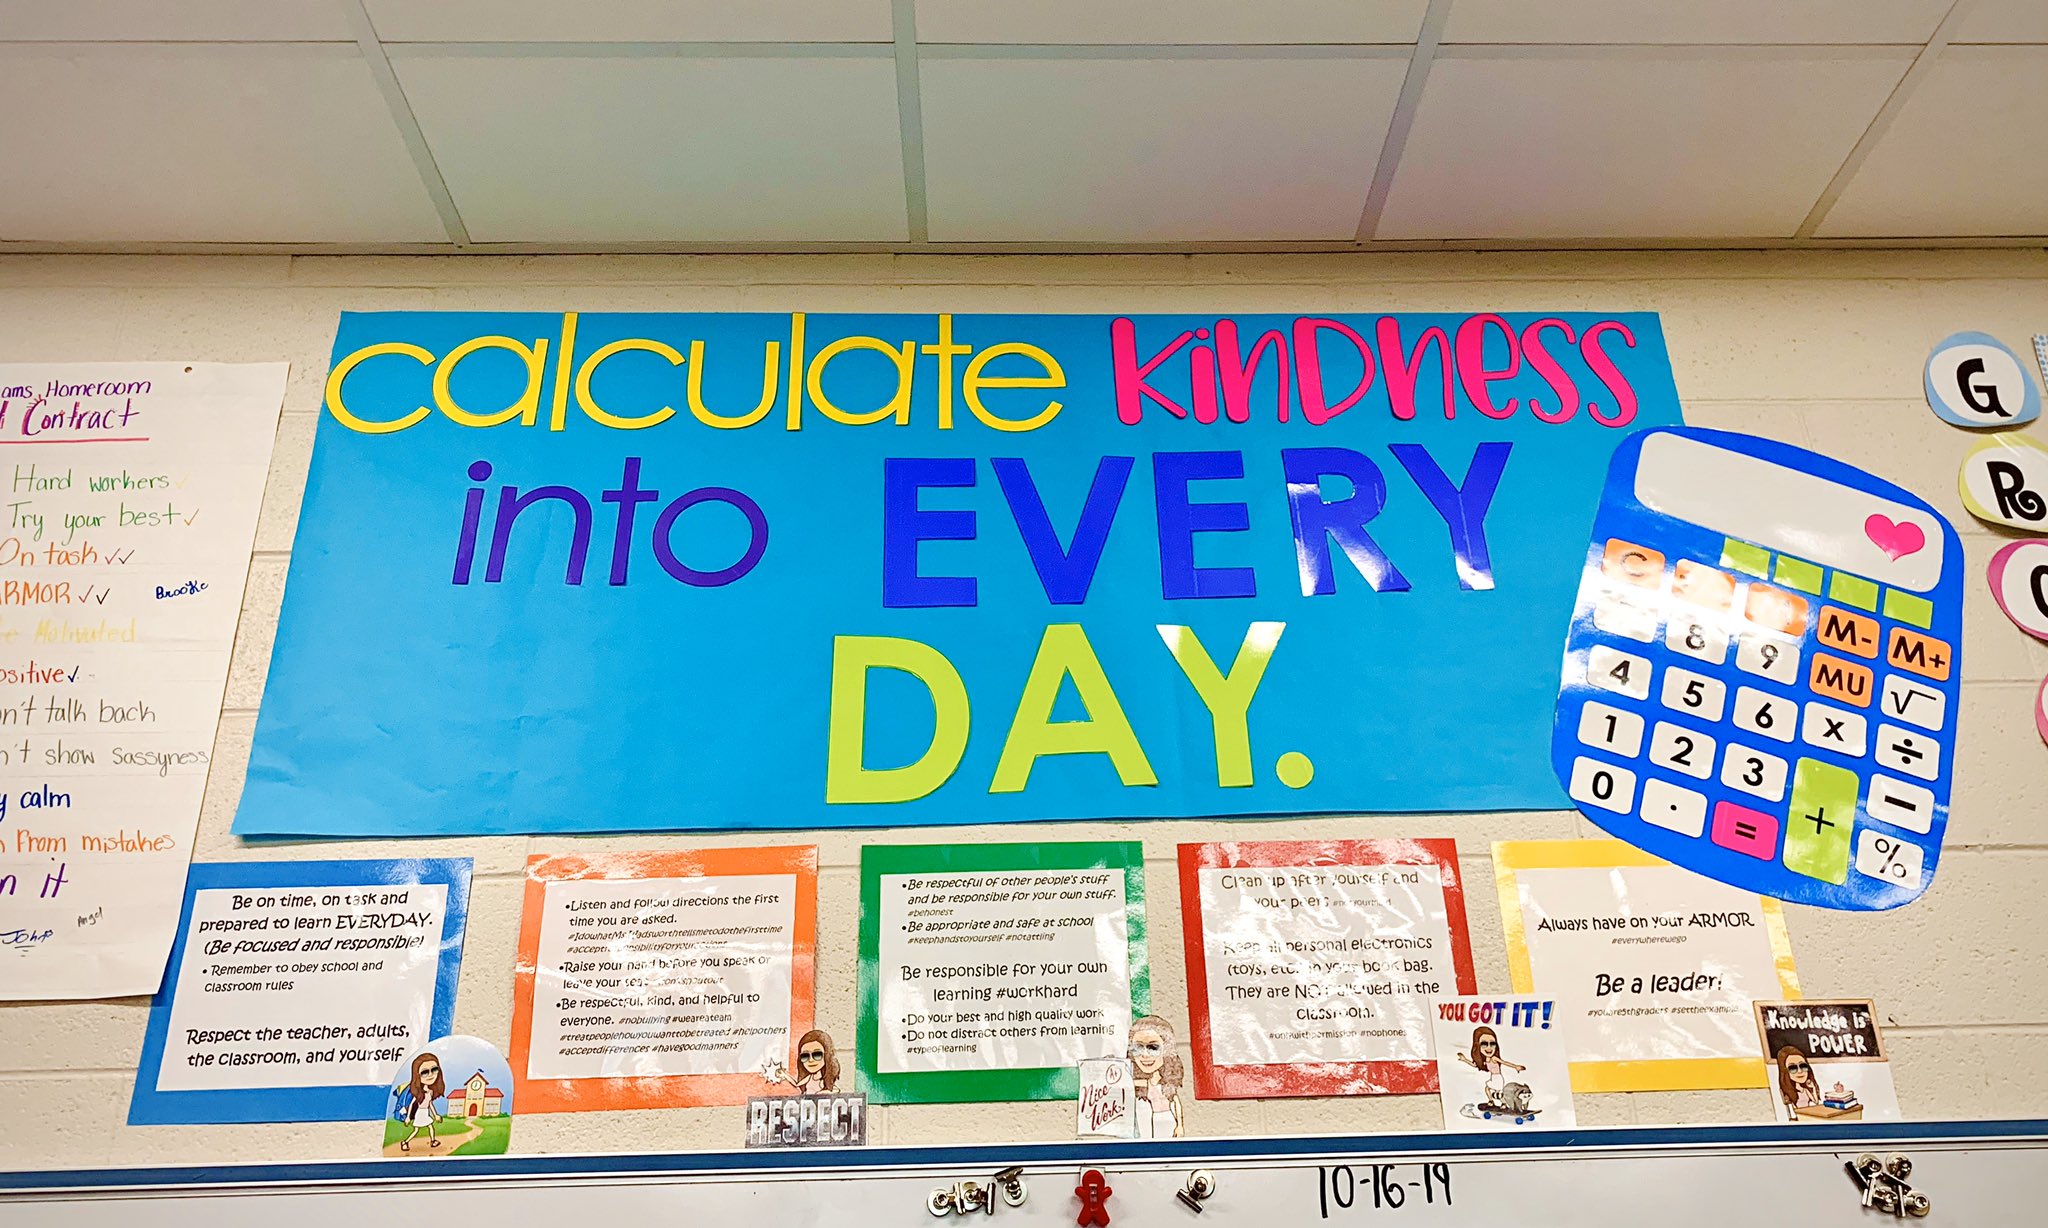 Ms Wadsworth Calculate Kindness Into Every Day Bekind Mathteacher T Co 5mi22xvs5u Twitter